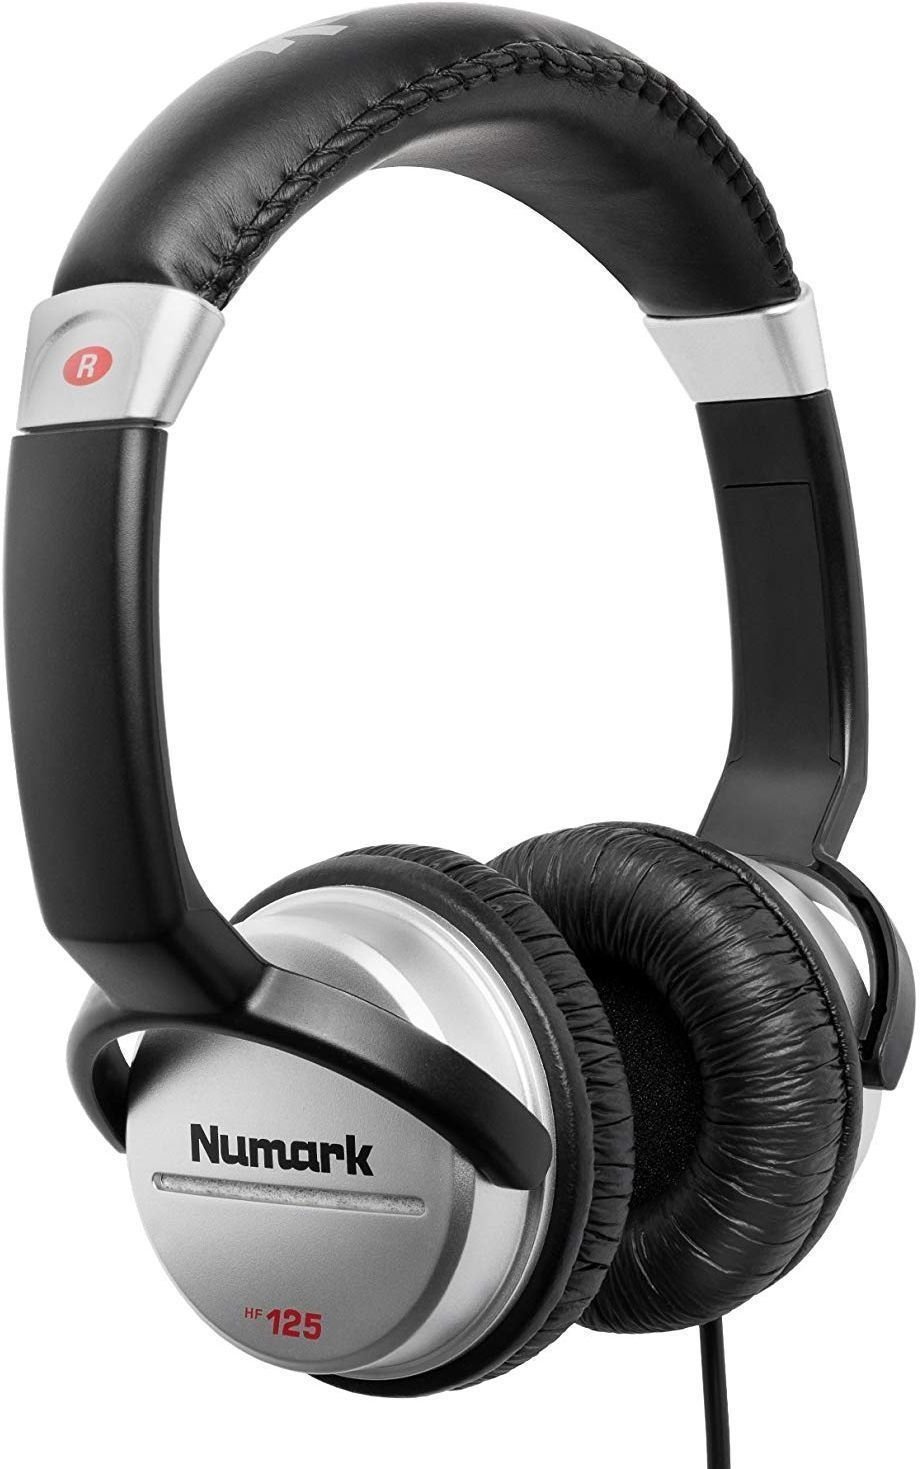 Numark HF-125 DJ sluchátka Numark